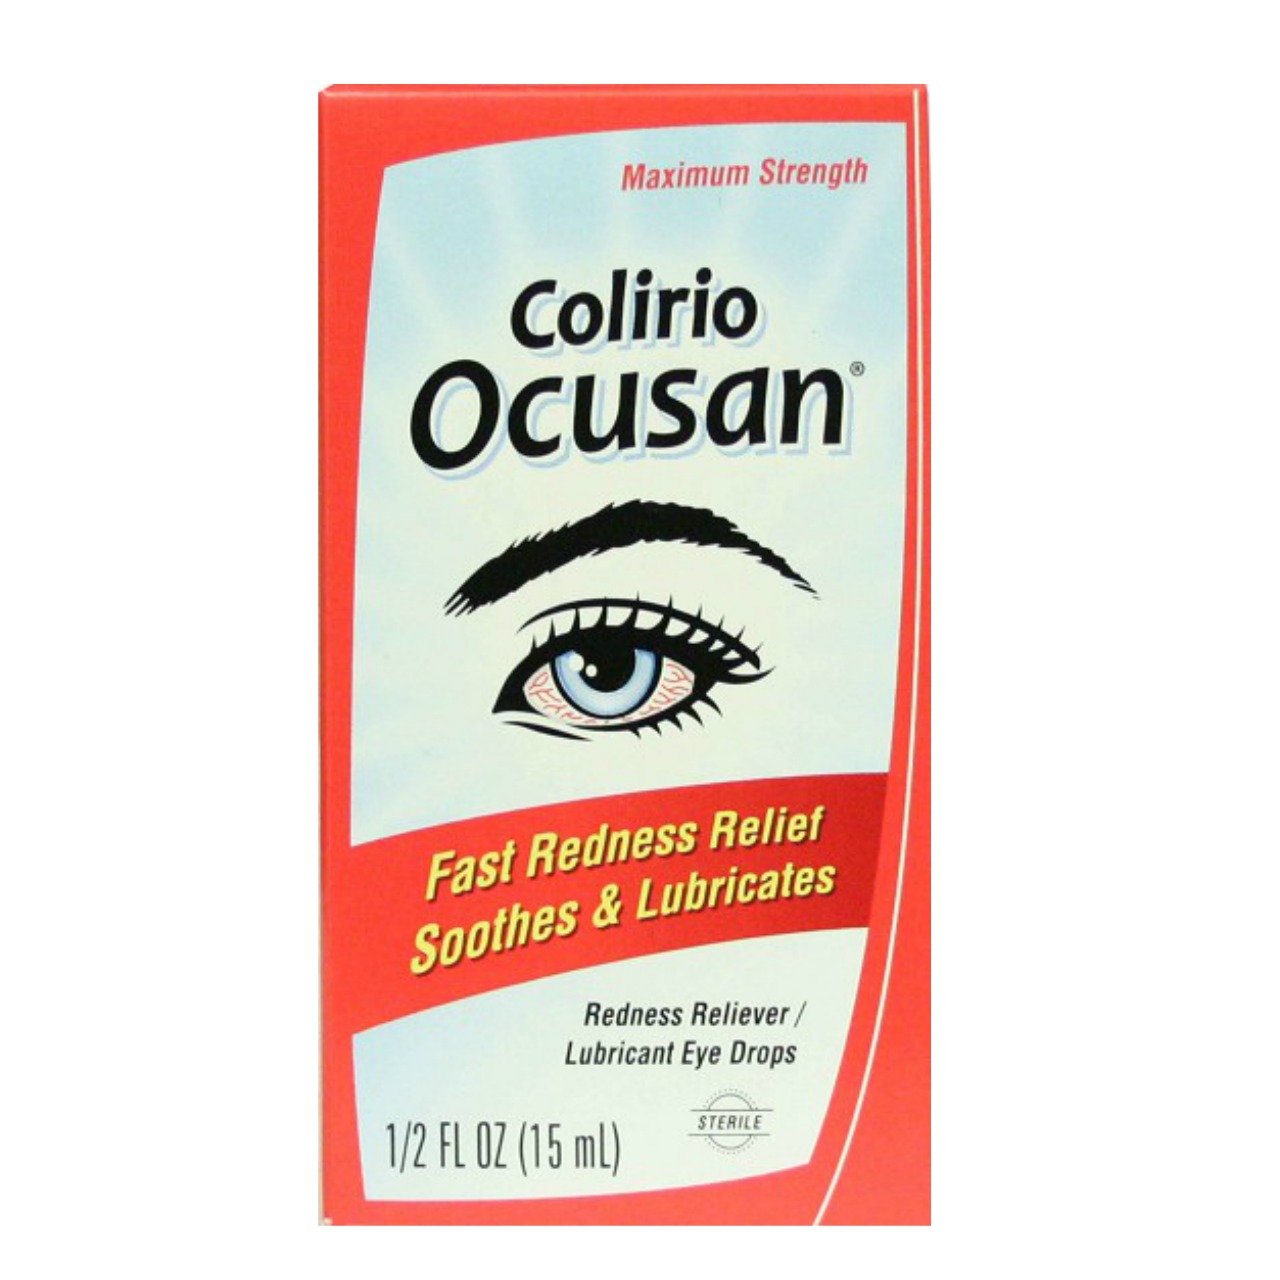 Colirio Ocusan Fast Redness Relief Soothes & Lubricates Eye Drops, 1/2 Fl.  Oz. (15ml) – 